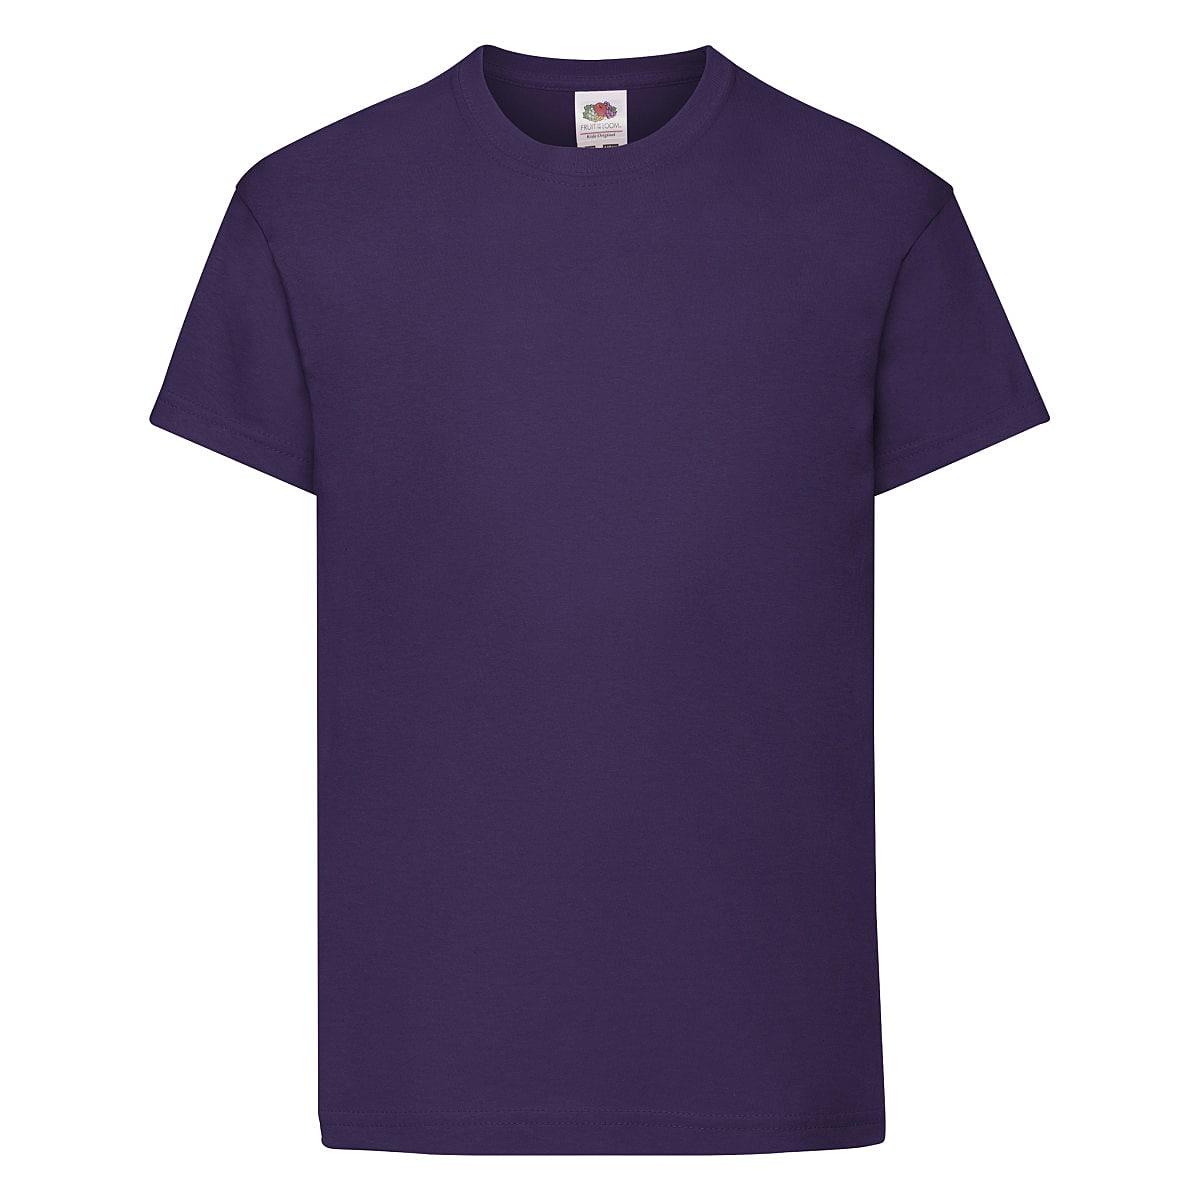 Fruit Of The Loom Kids Original T-Shirt in Purple (Product Code: 61019)